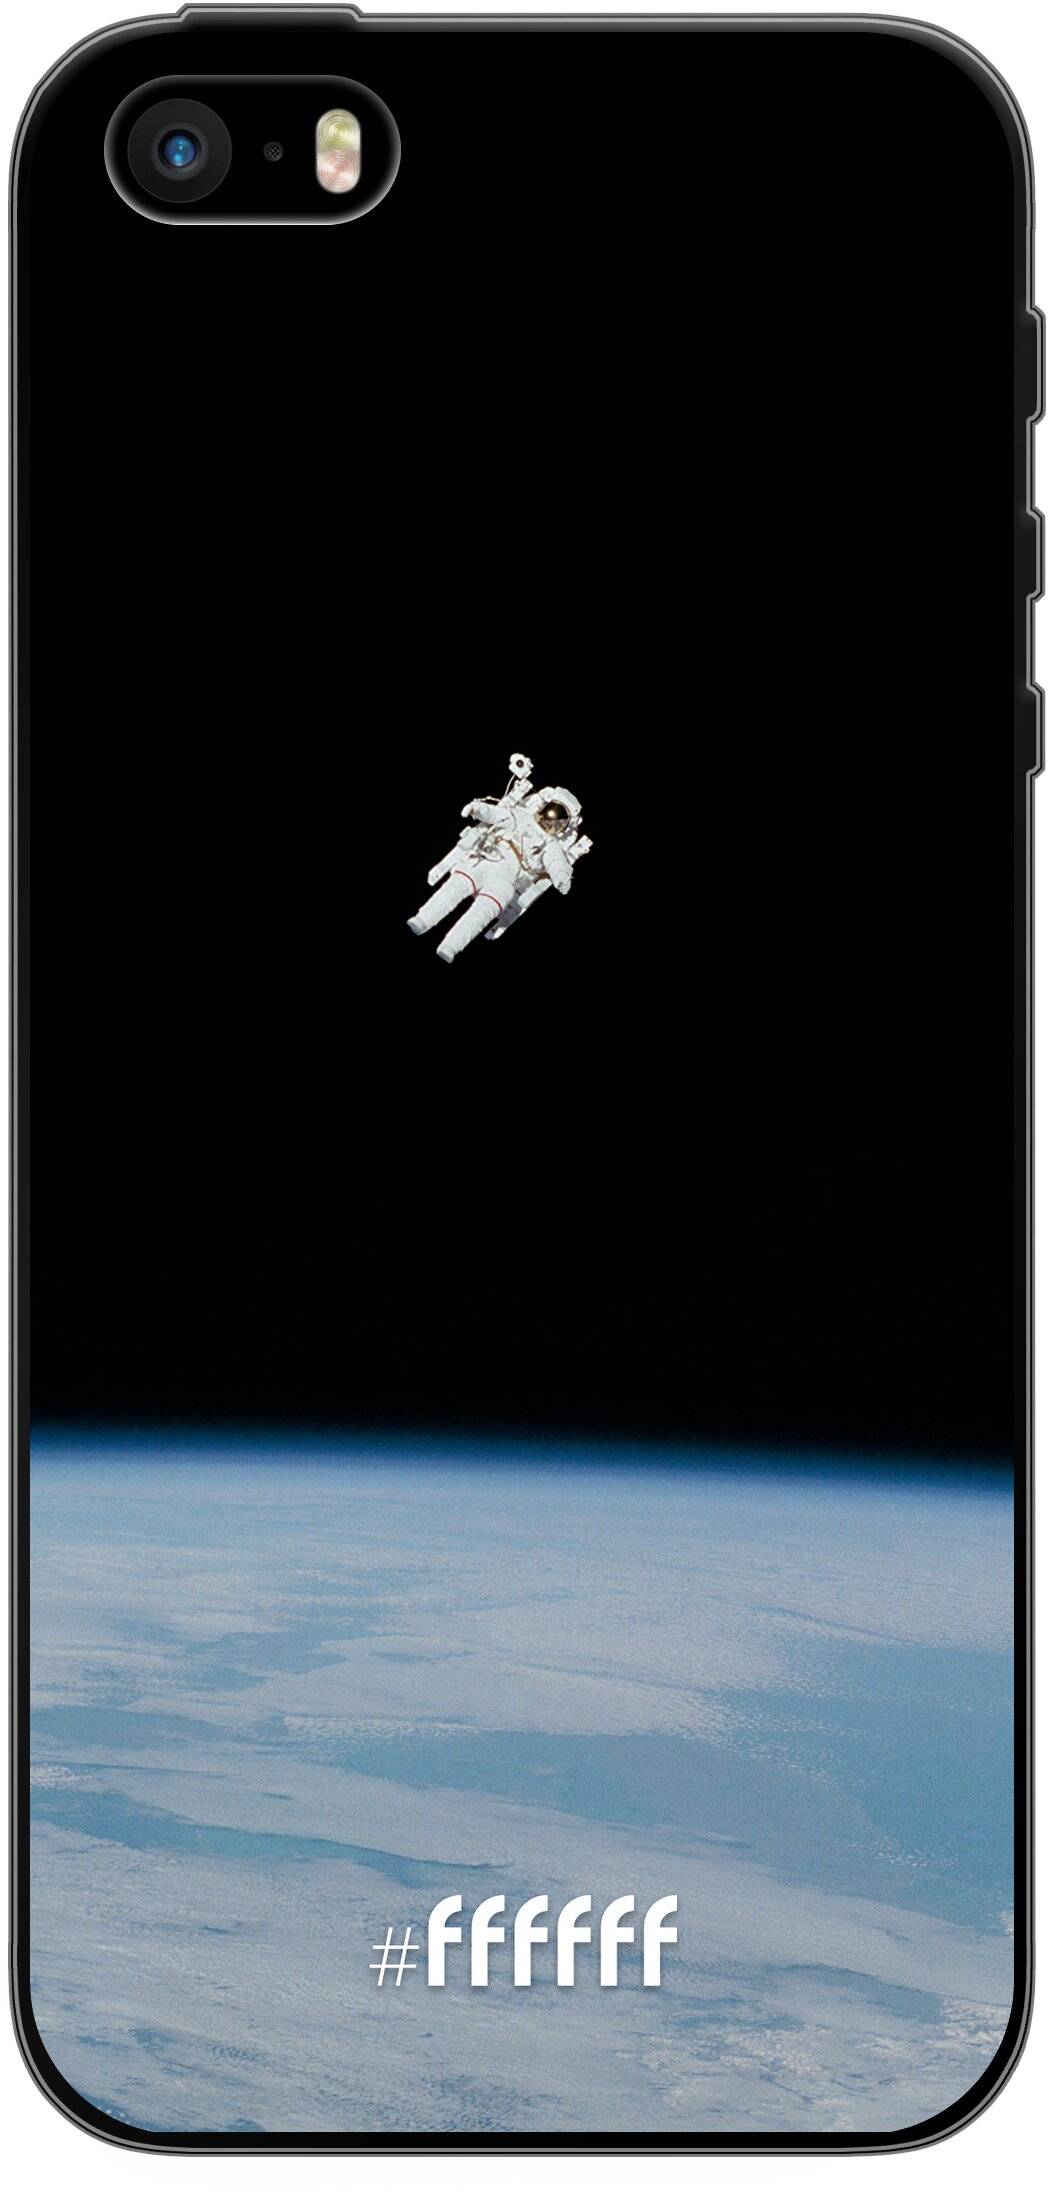 Spacewalk iPhone 5s